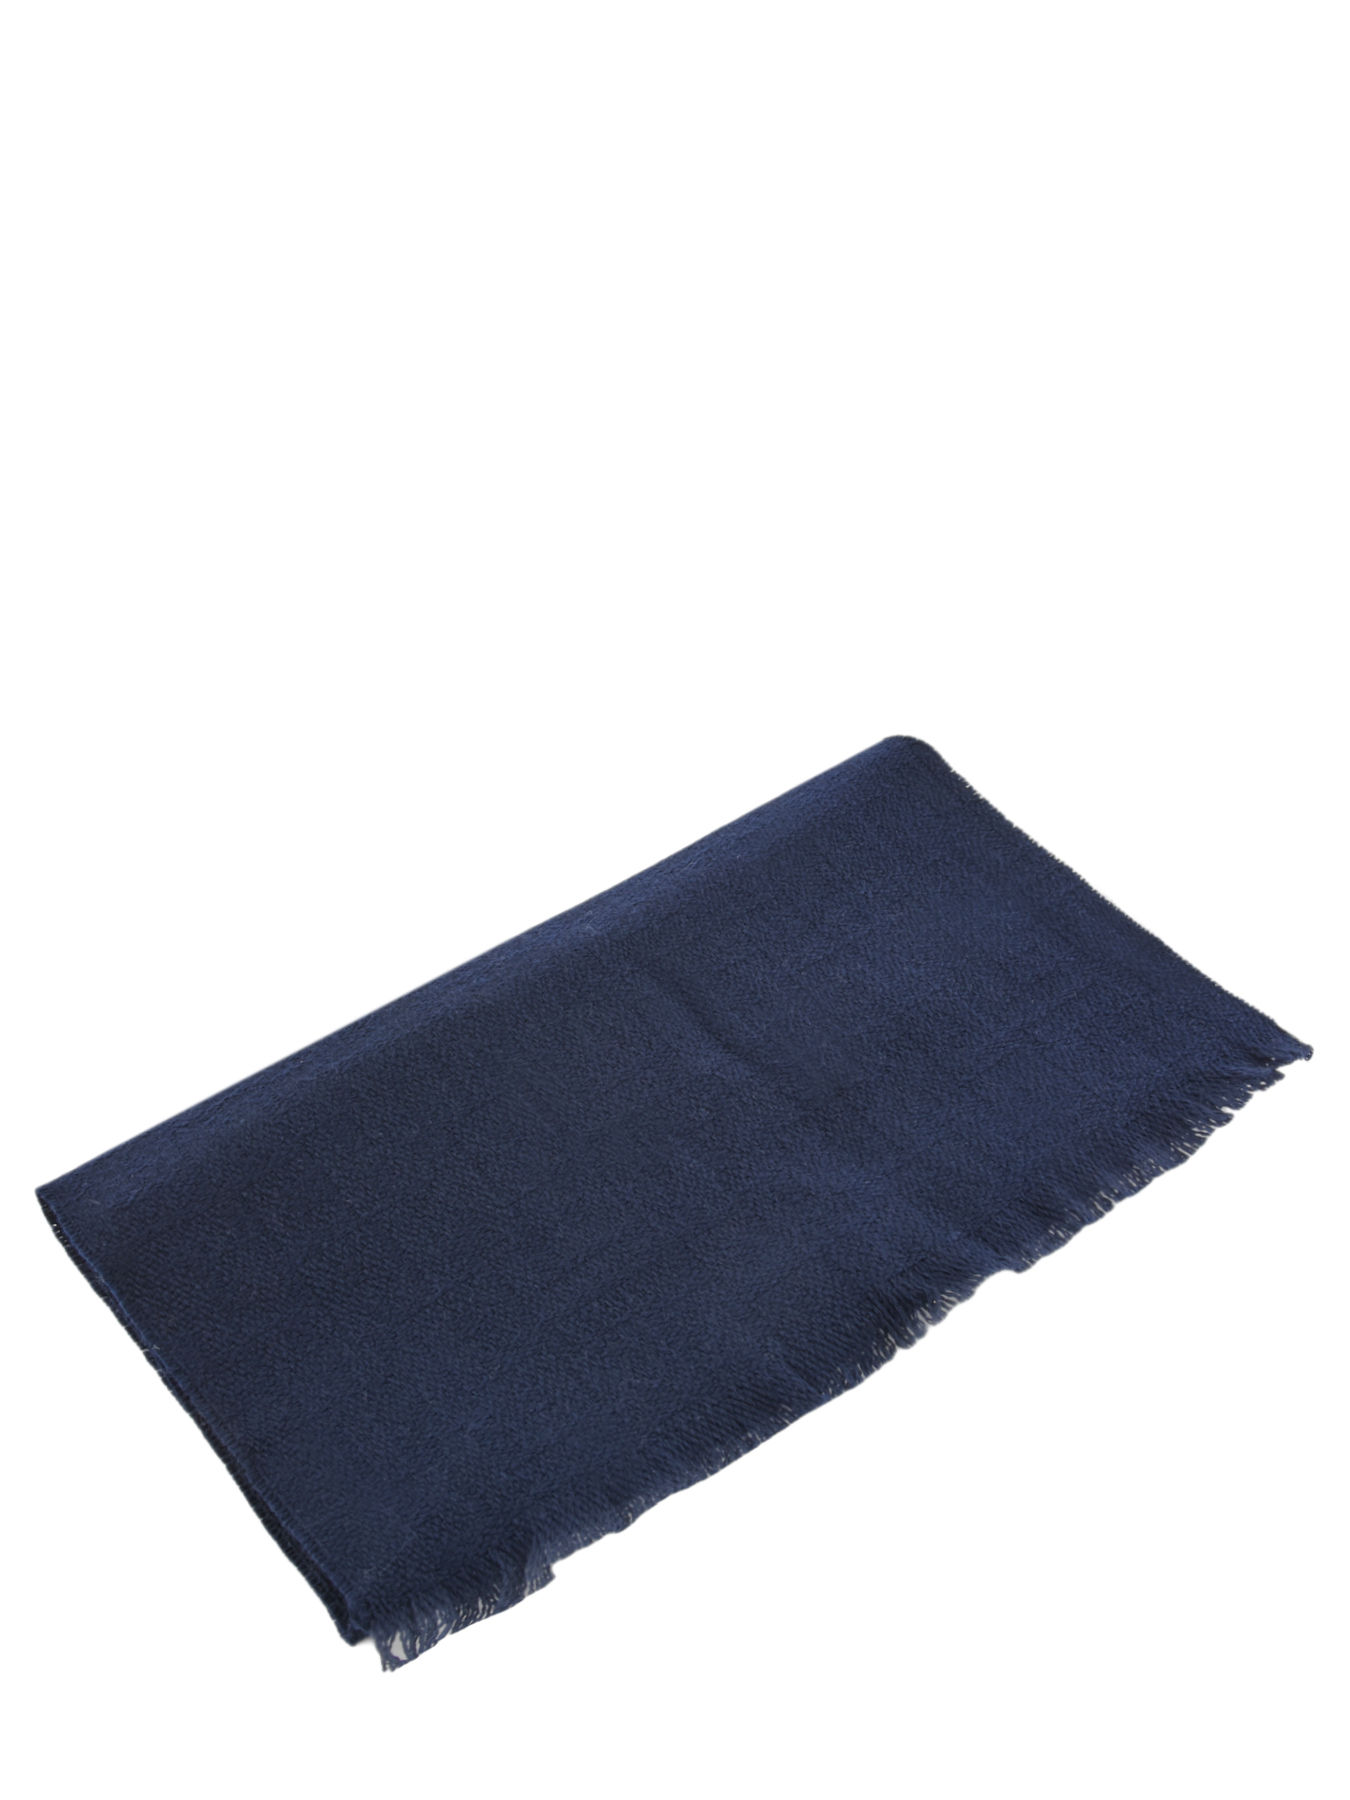 longchamp scarf price